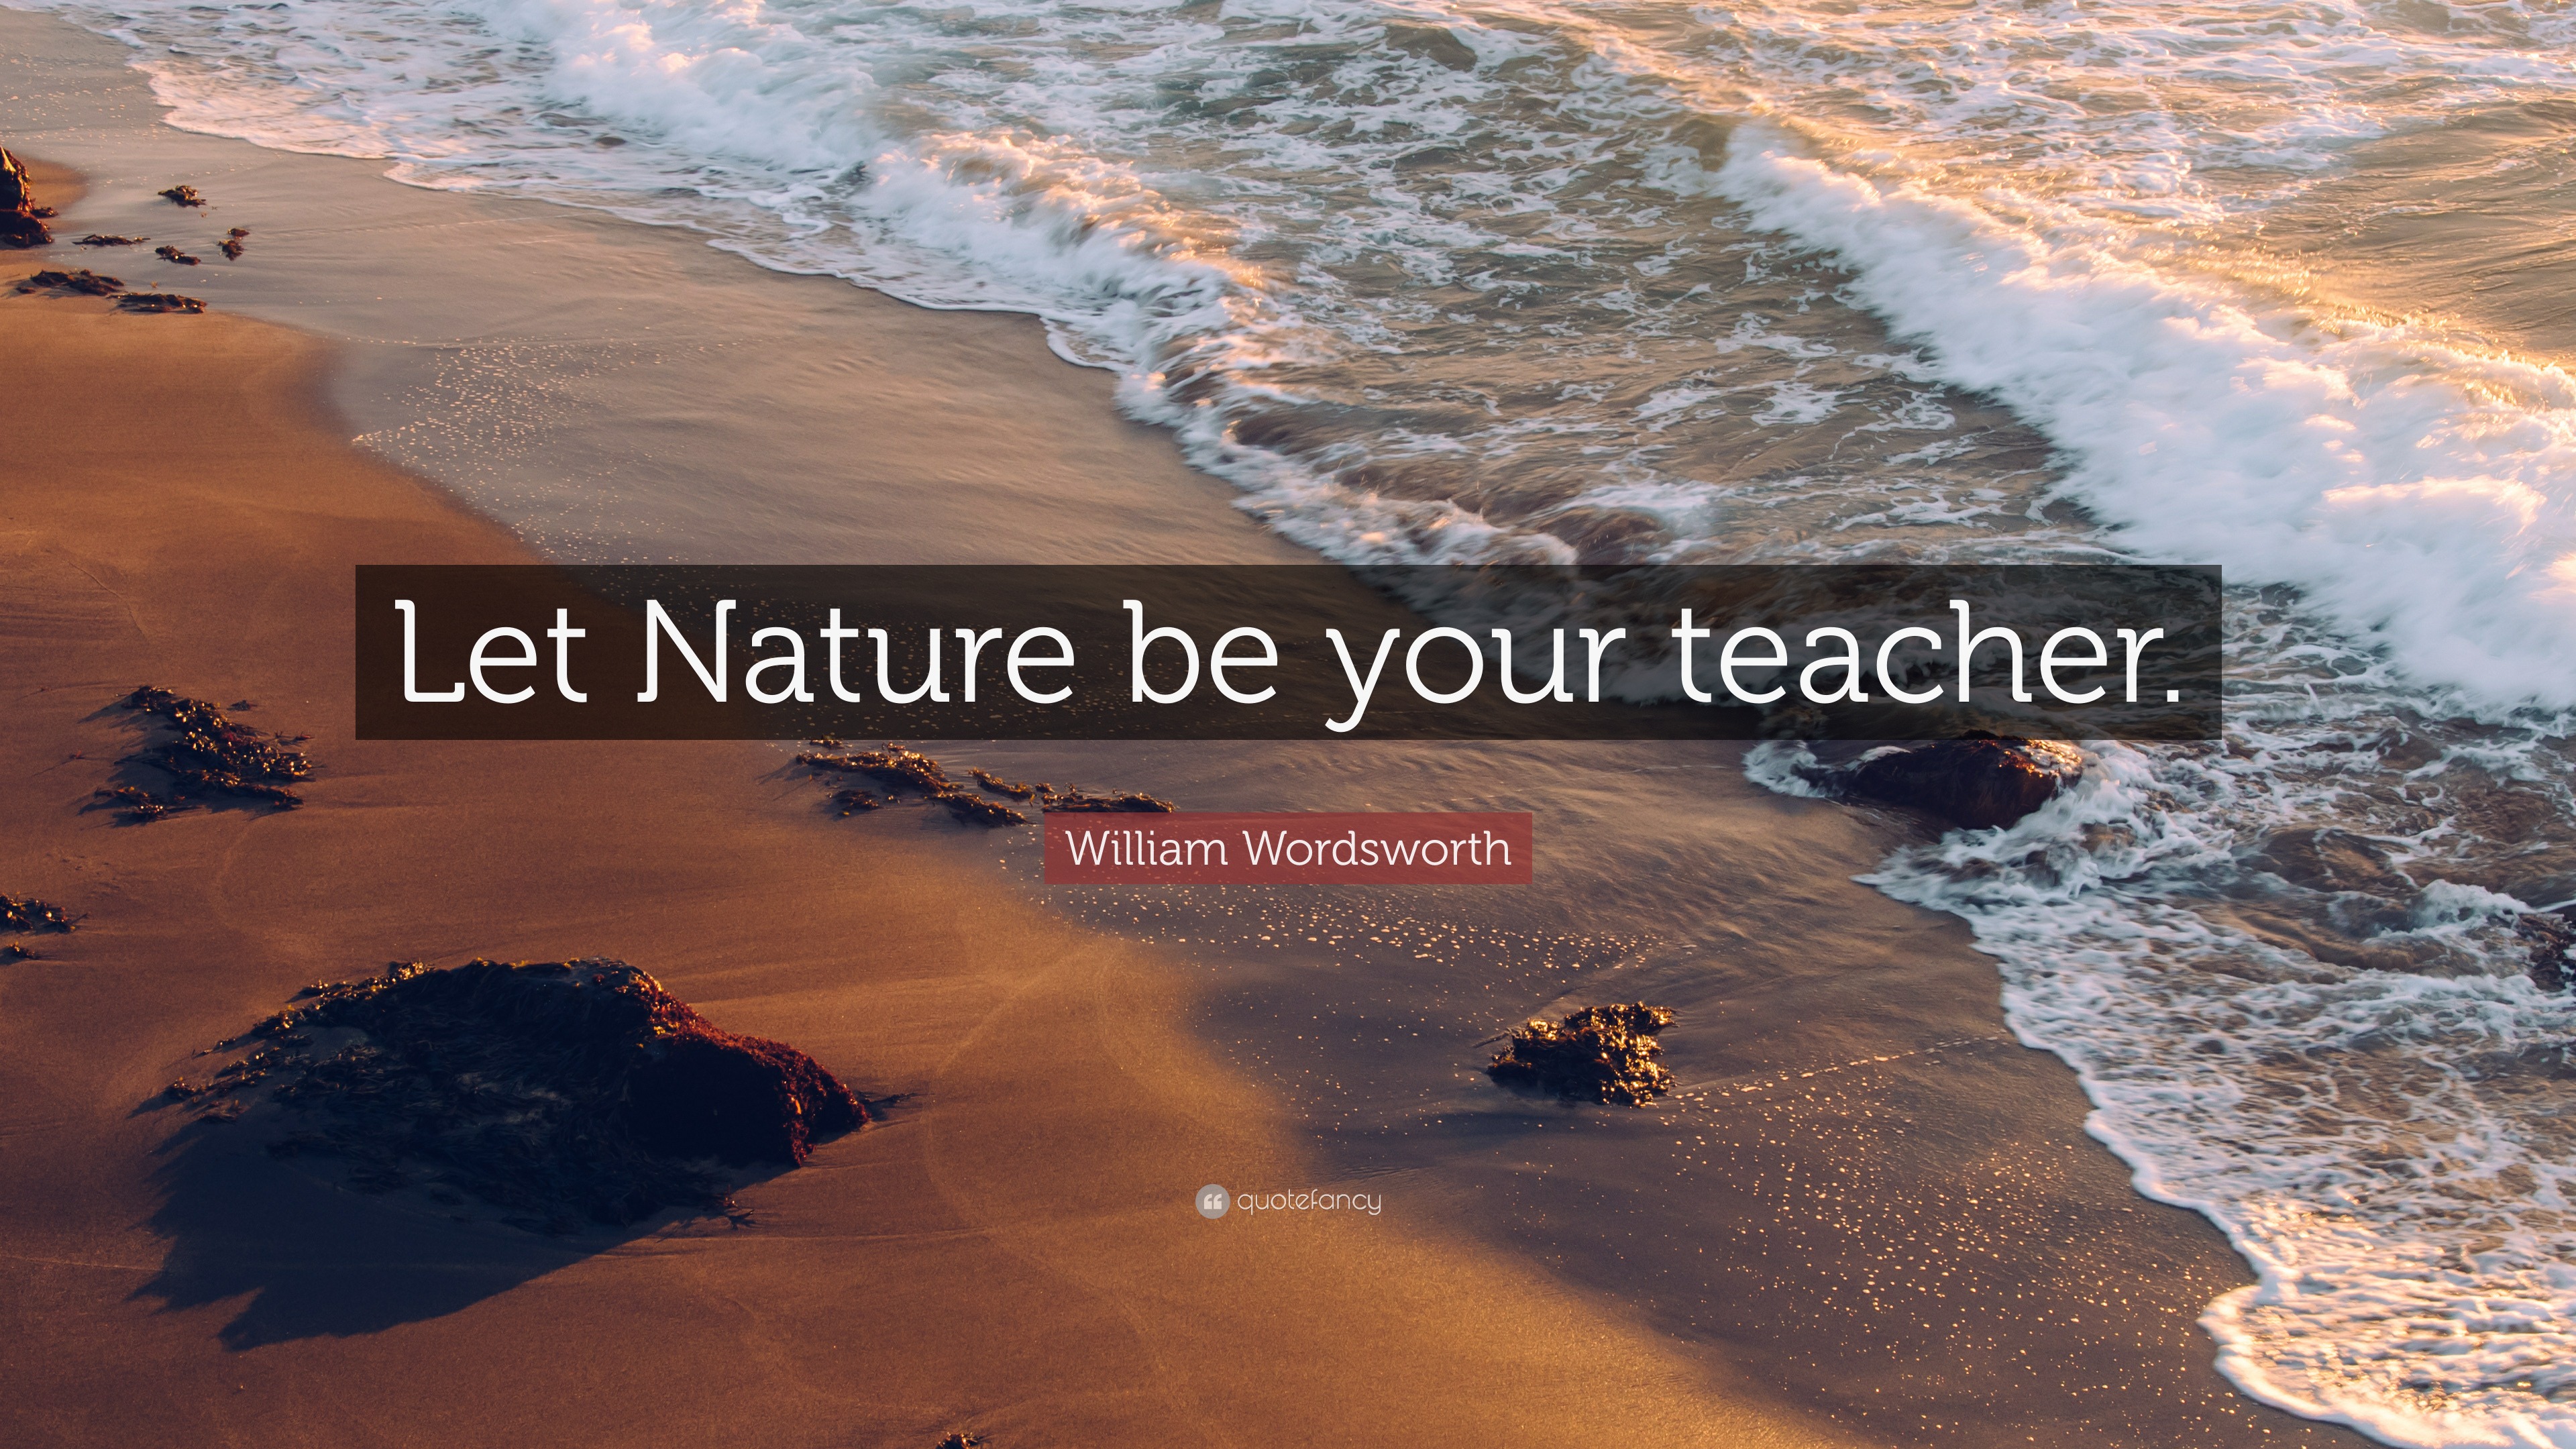 William Wordsworth Quote: “Let be your teacher.”